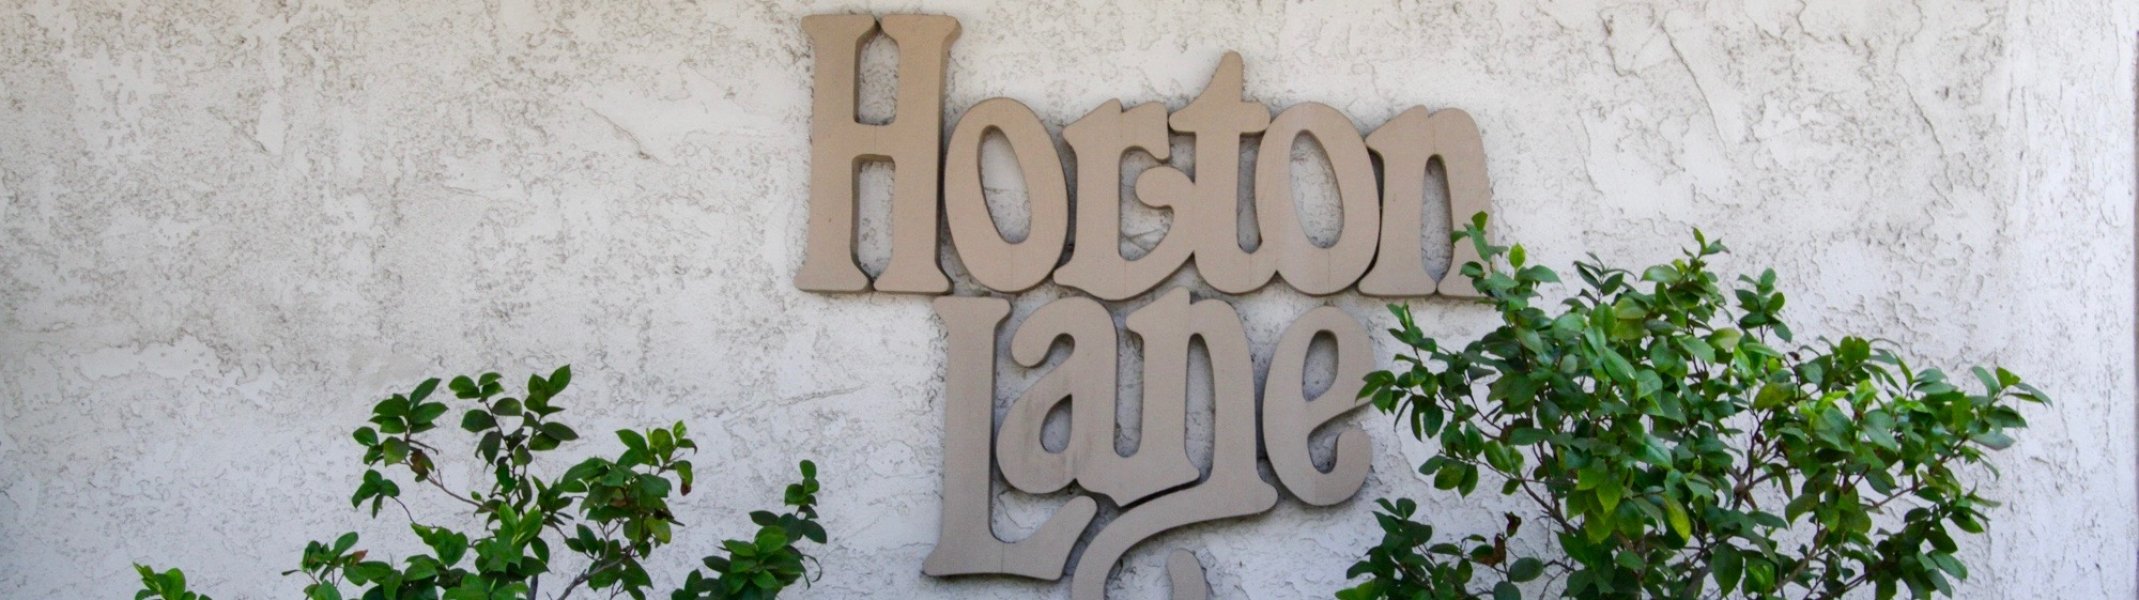 Horton Lane